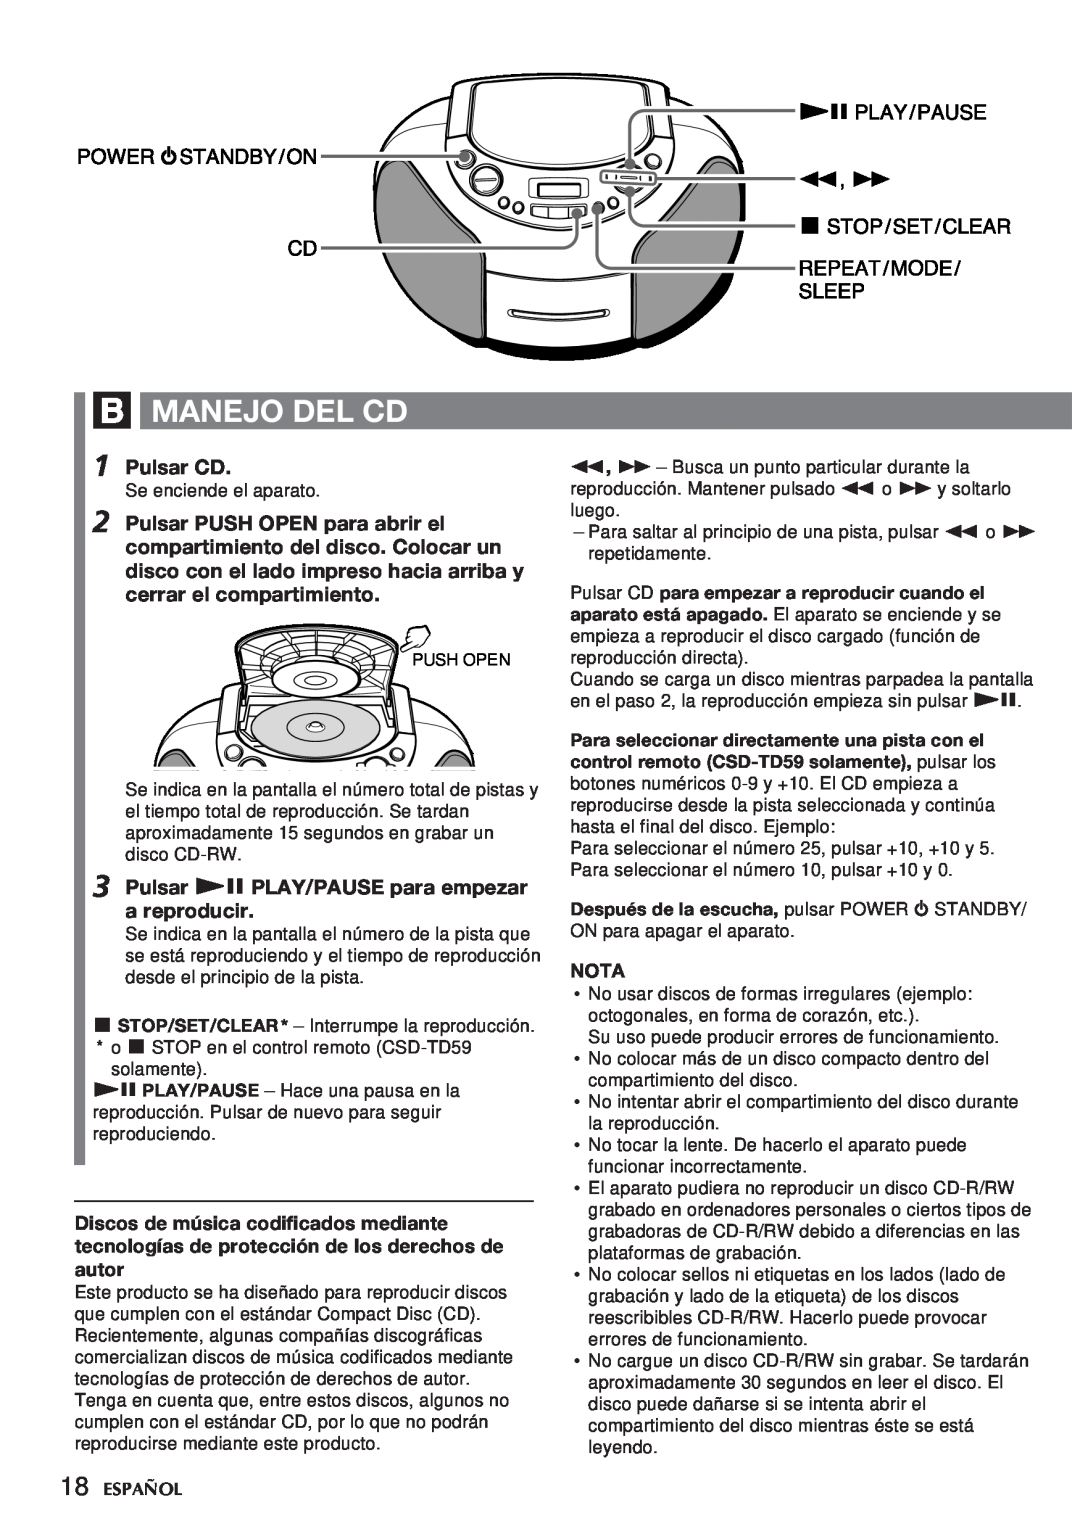 Aiwa CSD-TD59, CSD-TD55 manual B Manejo Del Cd, Pulsar CD, Pulsar e PLAY/PAUSE para empezar a reproducir, Nota 